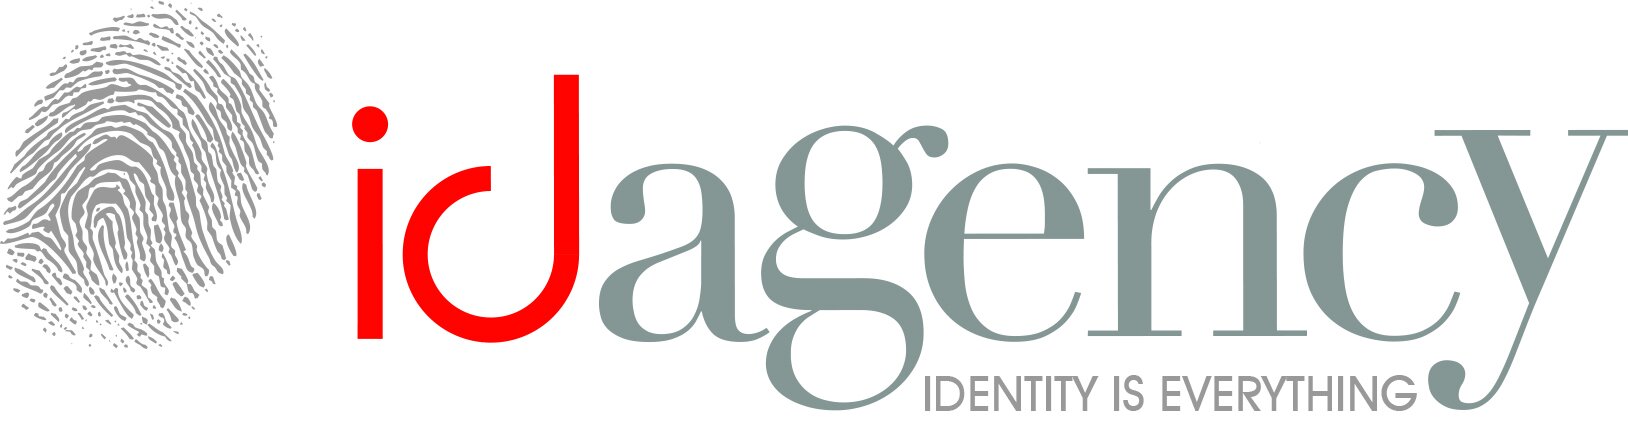 ID Logo.jpg